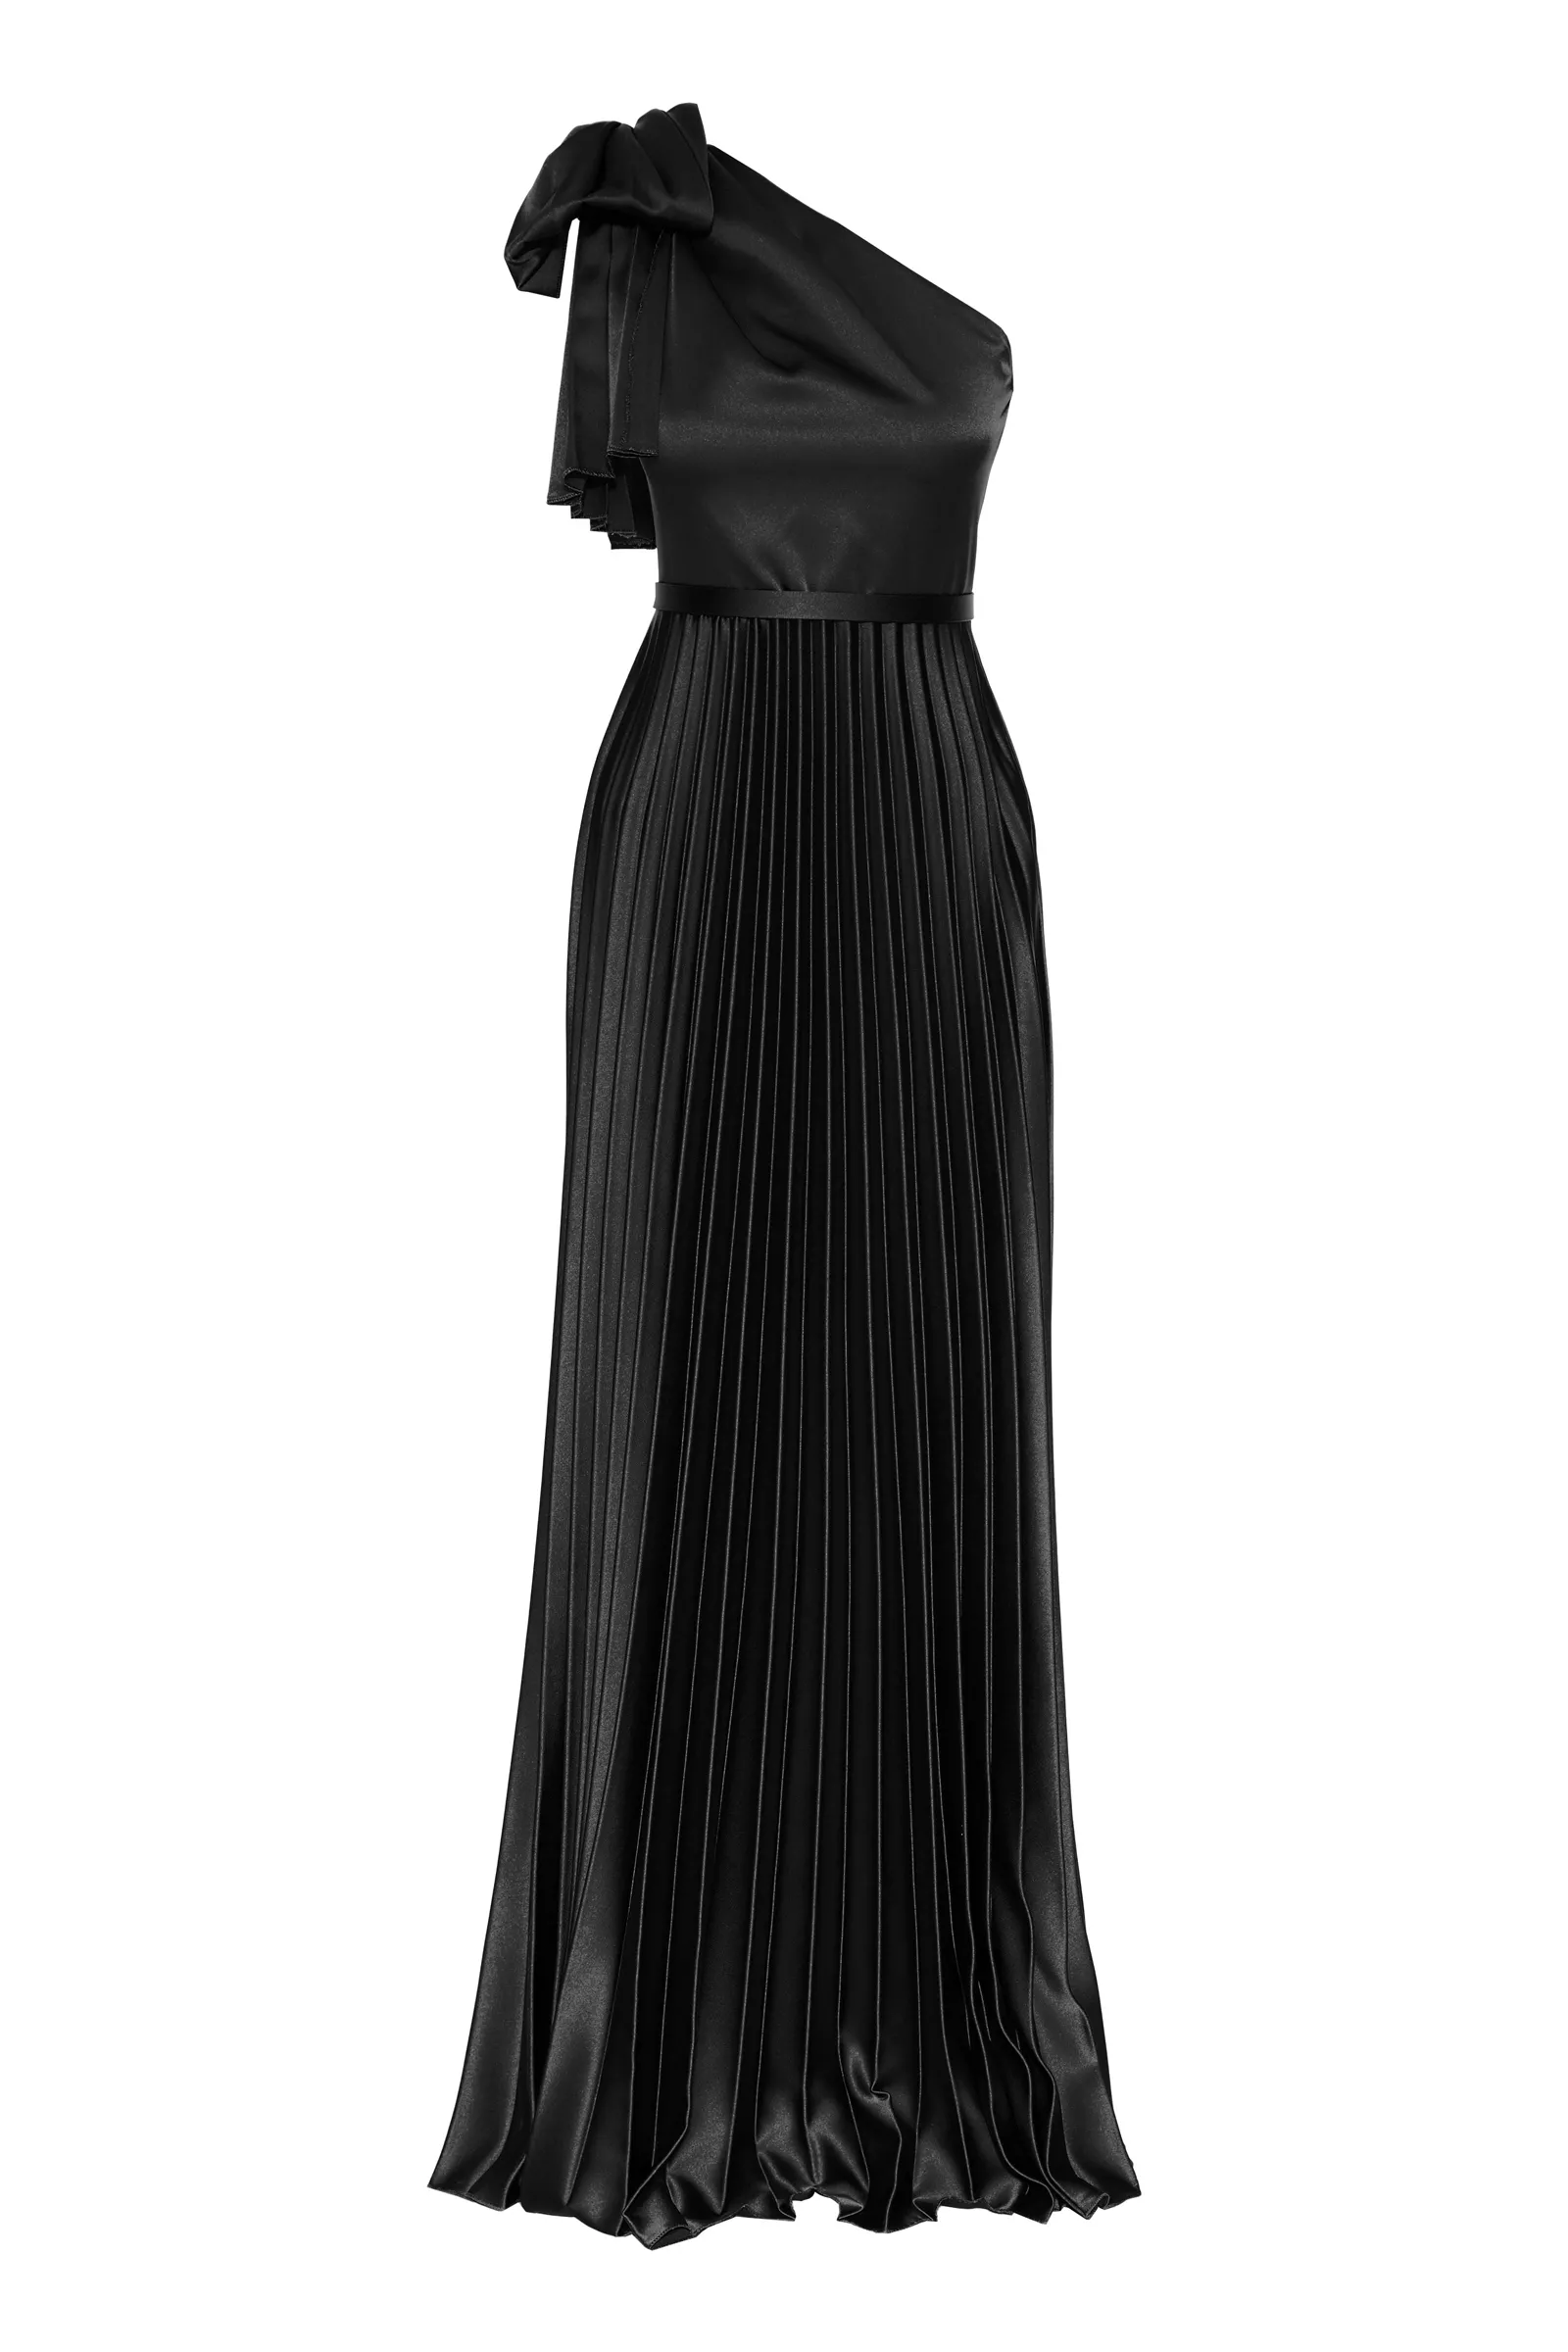 Black satin one arm long dress